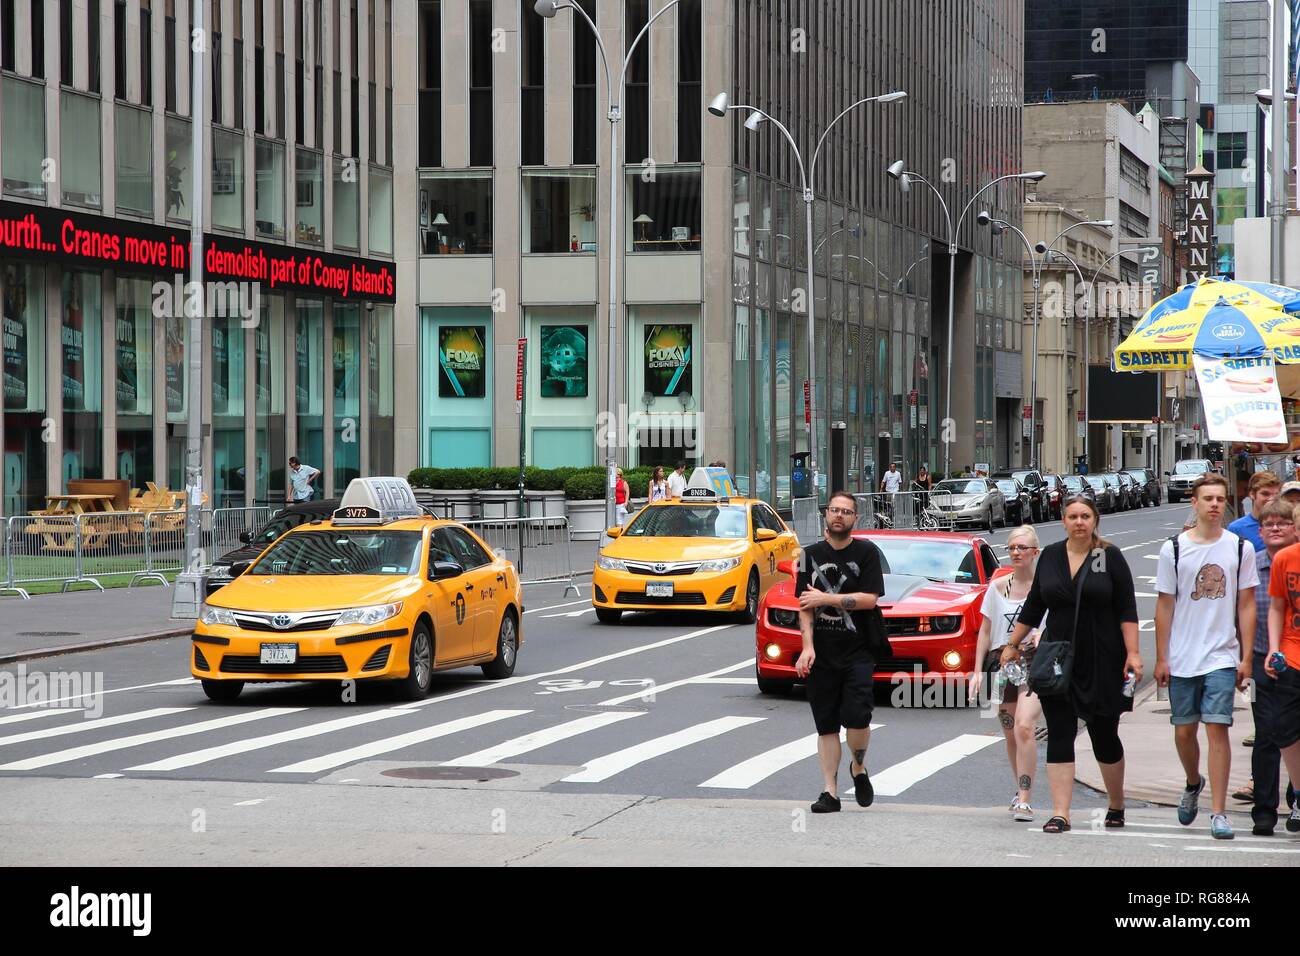 NEW YORK, USA - JULY 4, 2013: People walk along 6th Avenue in New York. Almost 19 million people live in New York City metropolitan area. Stock Photo